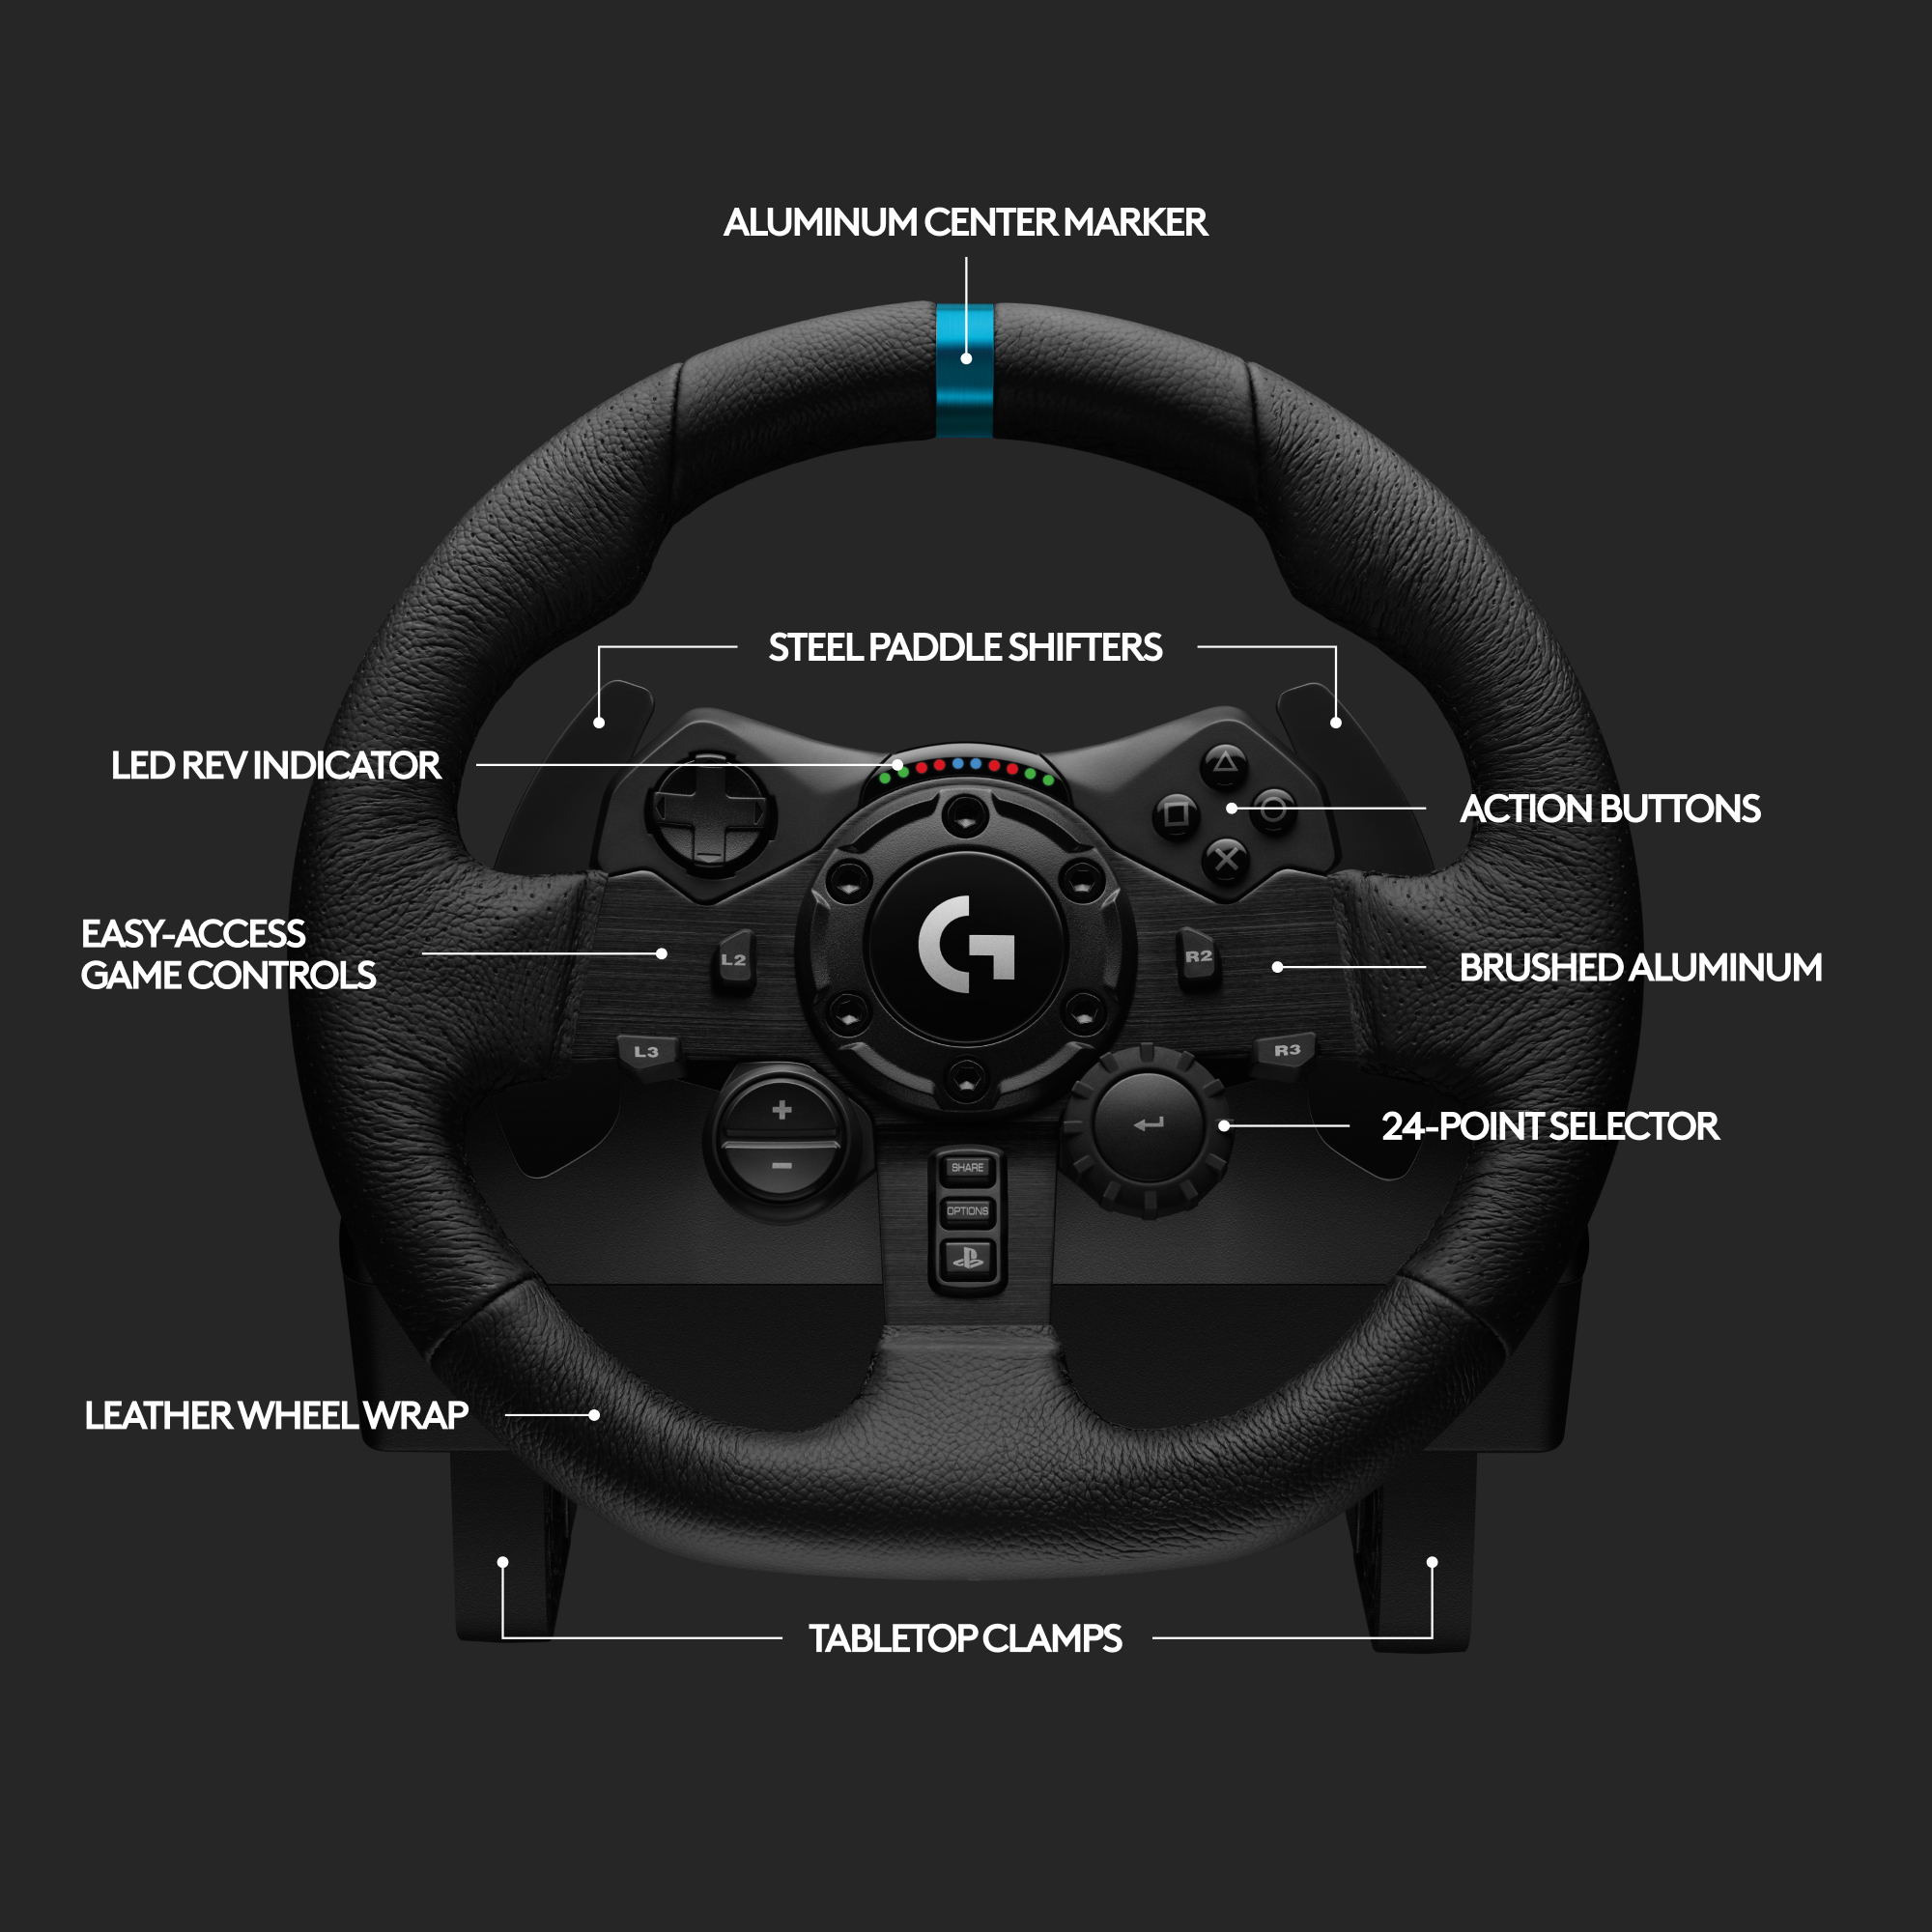 Logitech G923 TRUEFORCE Sim Racing Wheel for Xbox, Playstation and PC